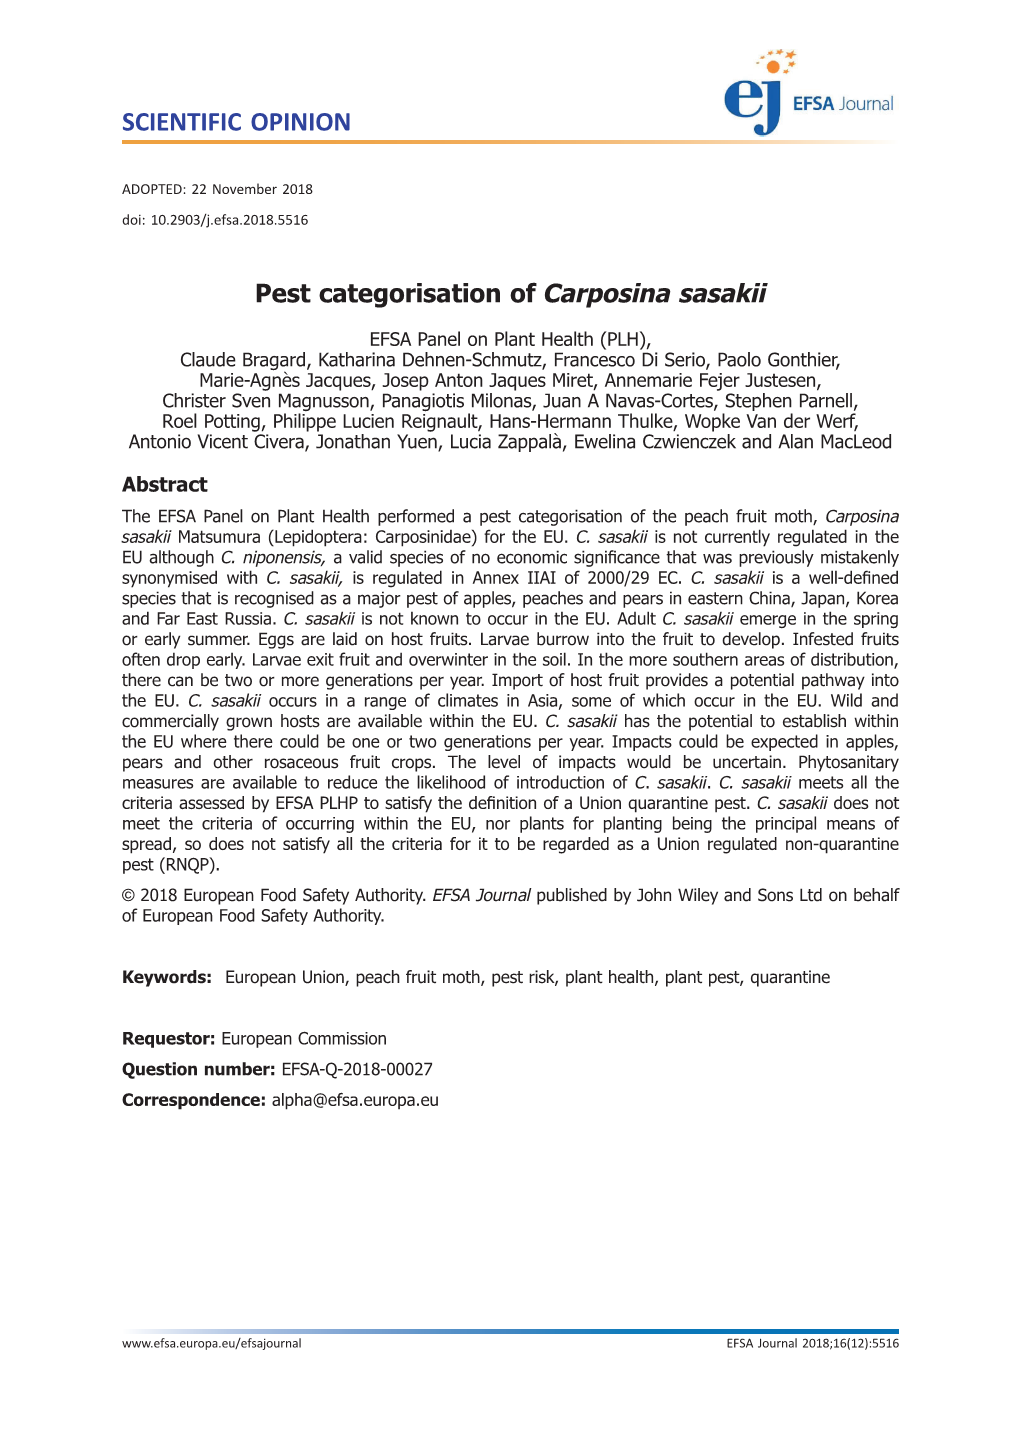 Pest Categorisation of Carposina Sasakii